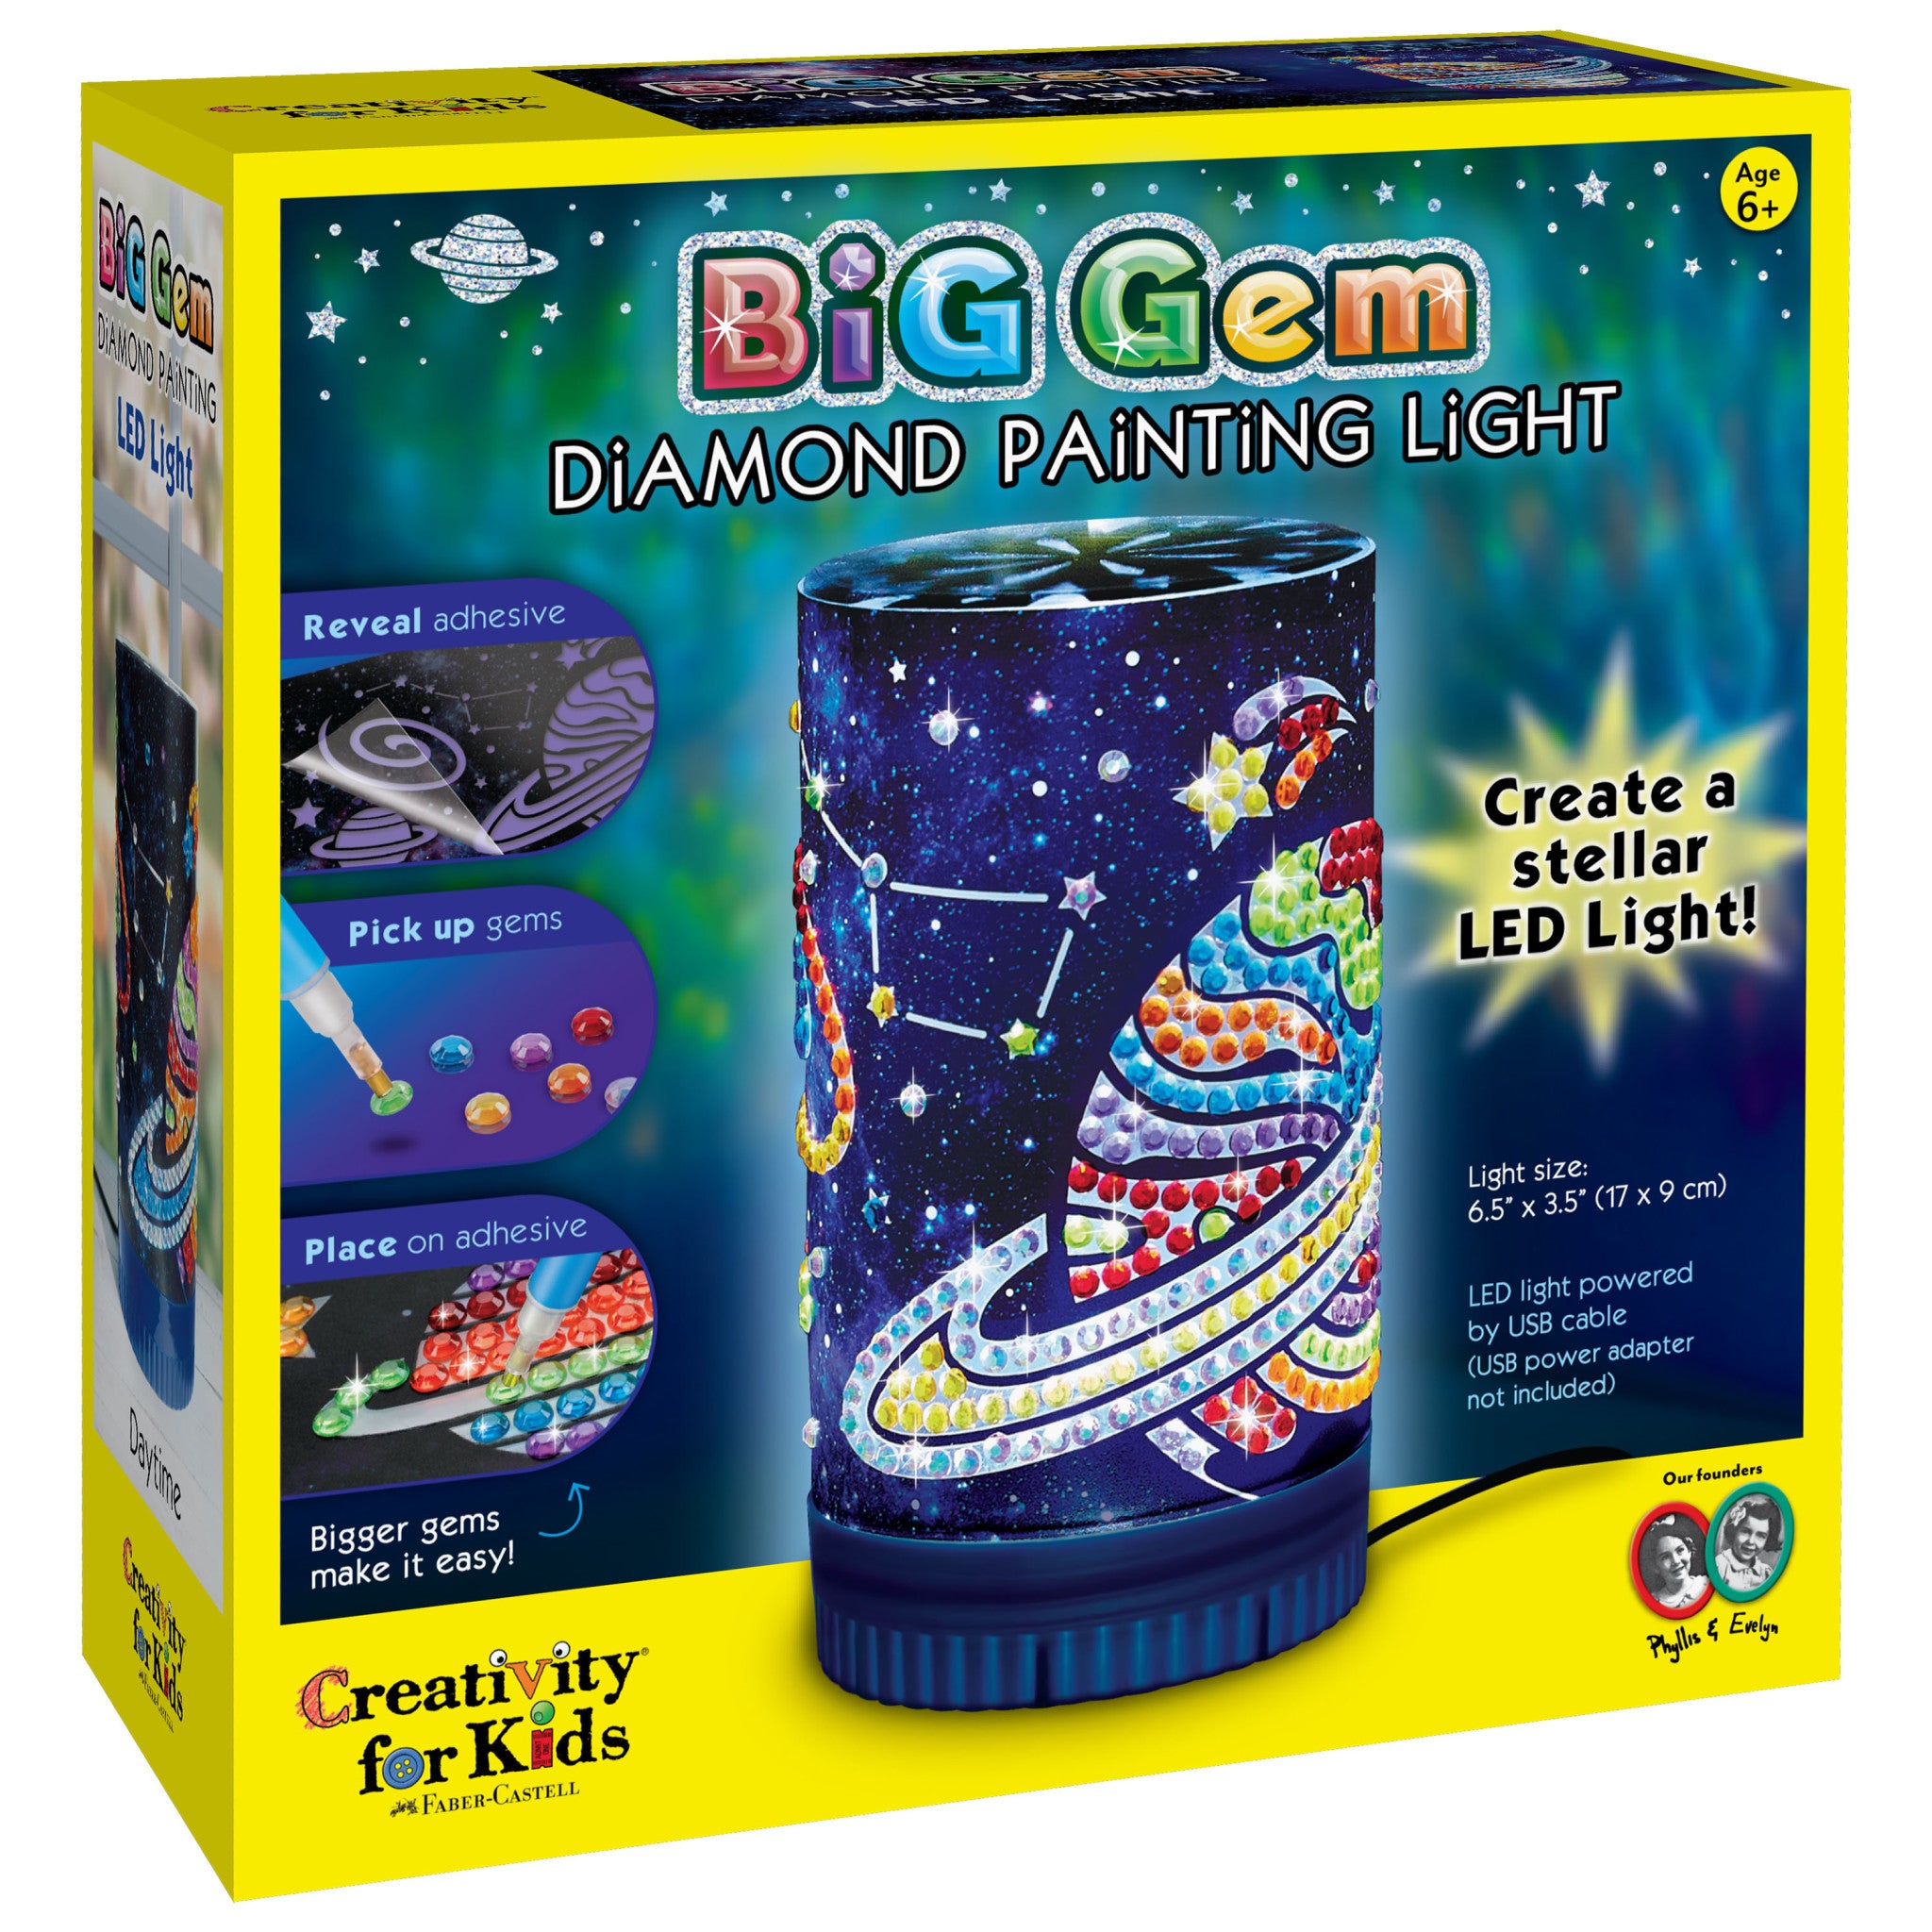 Faber-Castell Creativity for Kids Big Gem Diamond Painting Light Kit - Each